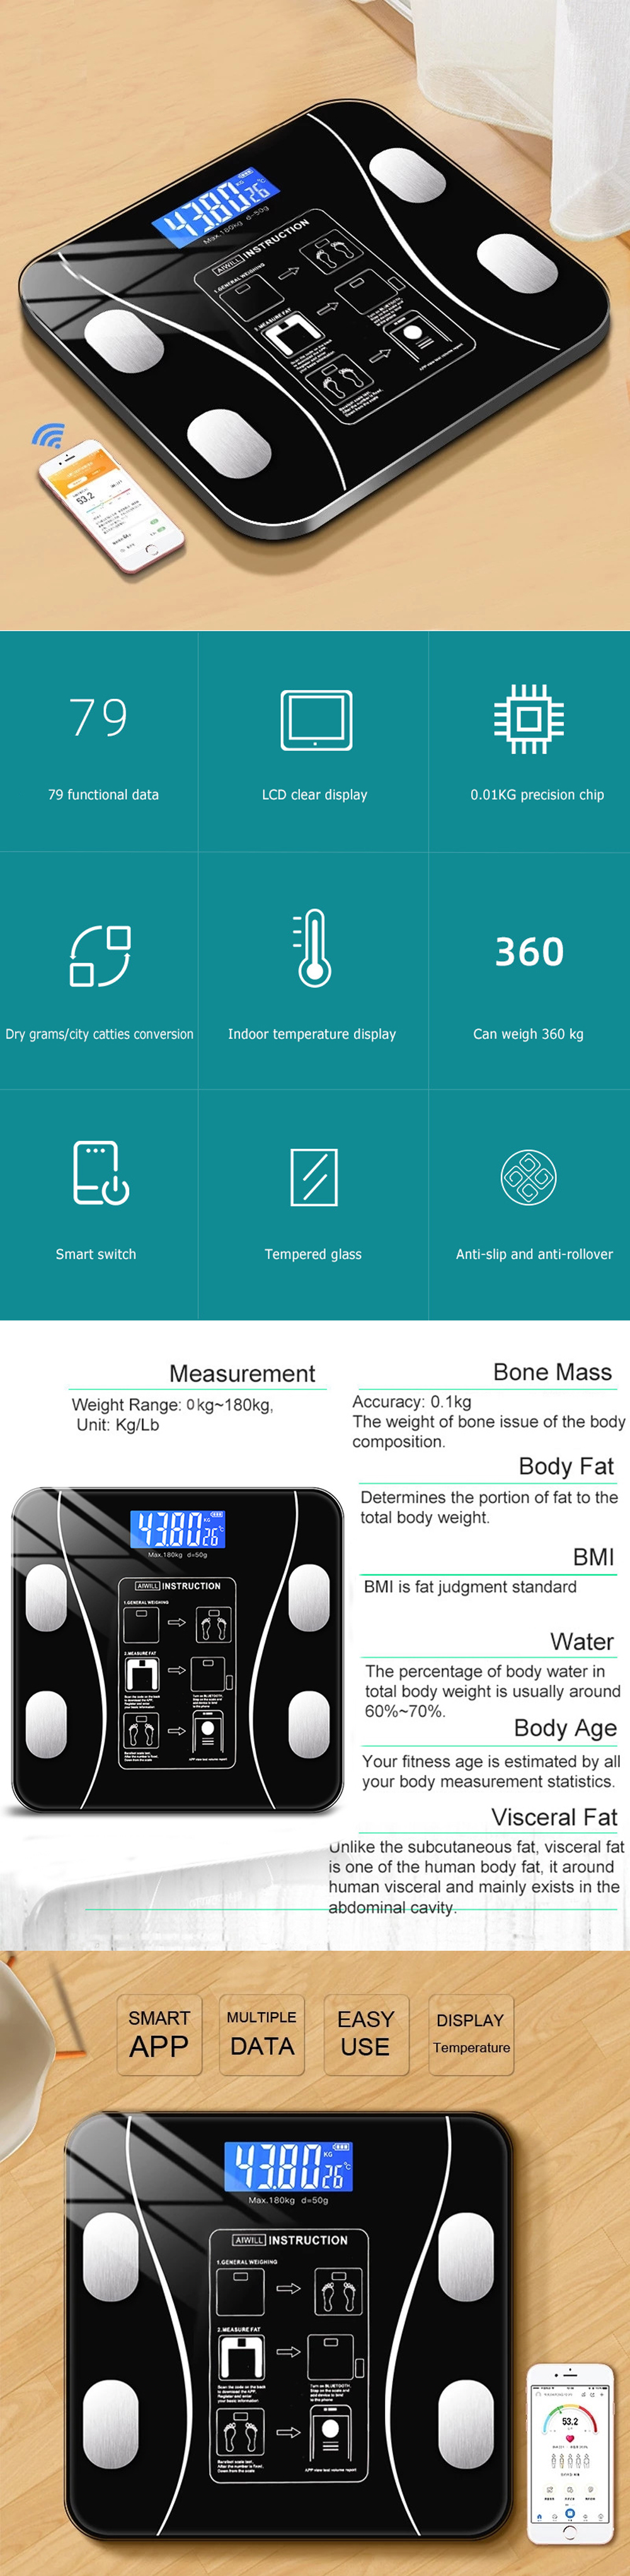 KALOADreg-Smart-Wireless-Body-Fat-Scale-USBSolar-Charing-BMI-Scales-Digital-Scale-For-Body-Weight--W-1794466-1